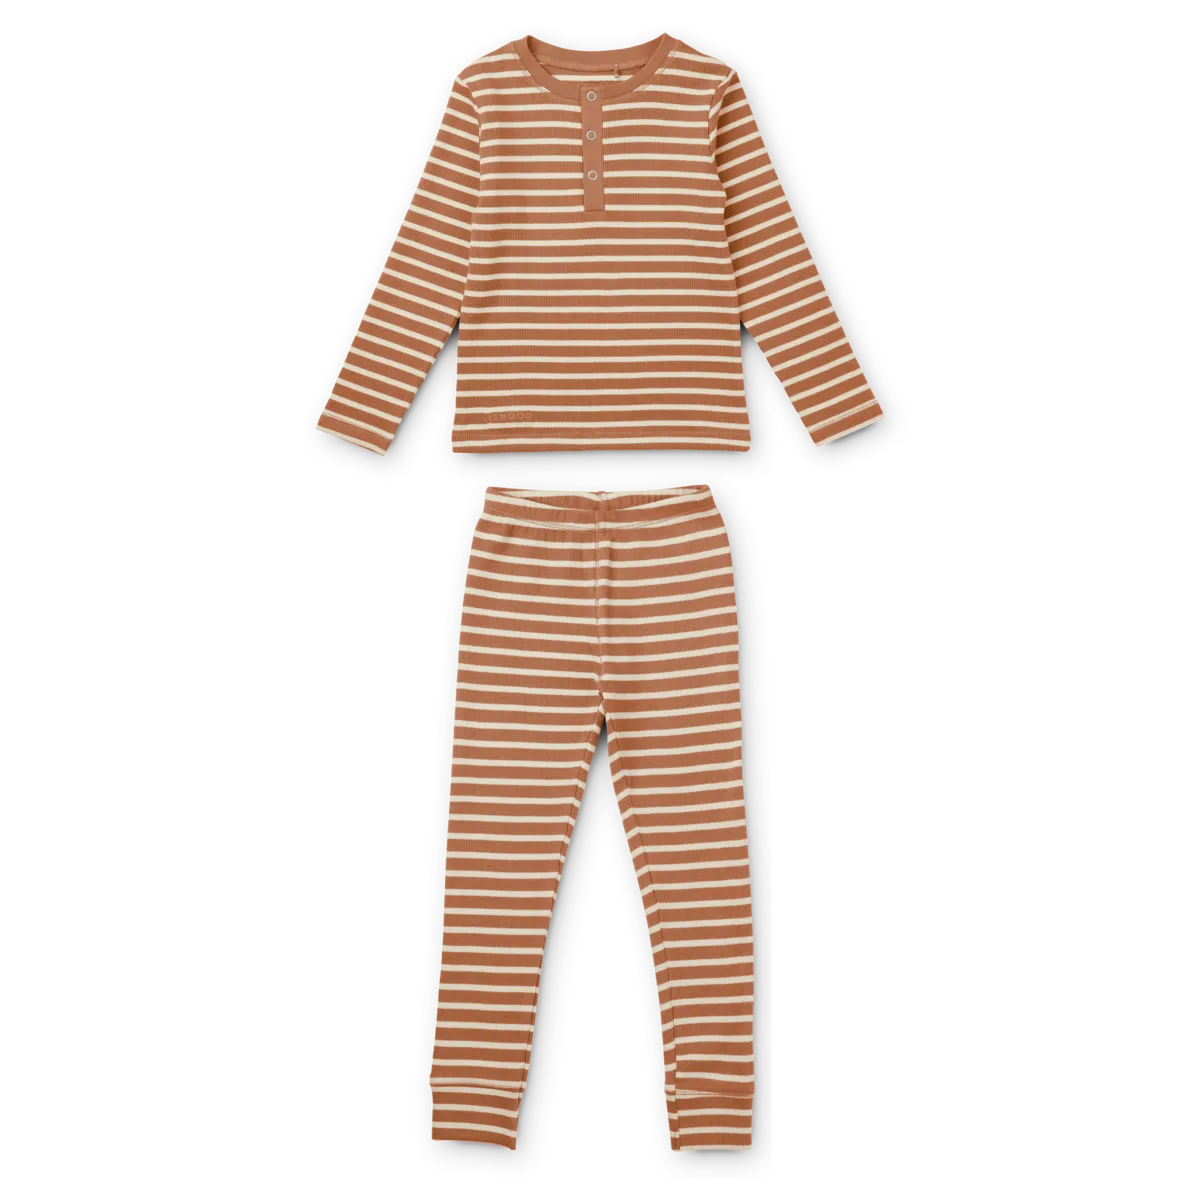 Liewood Wilhelm Pyjamas Set Stripe Tuscany rose/Sandy